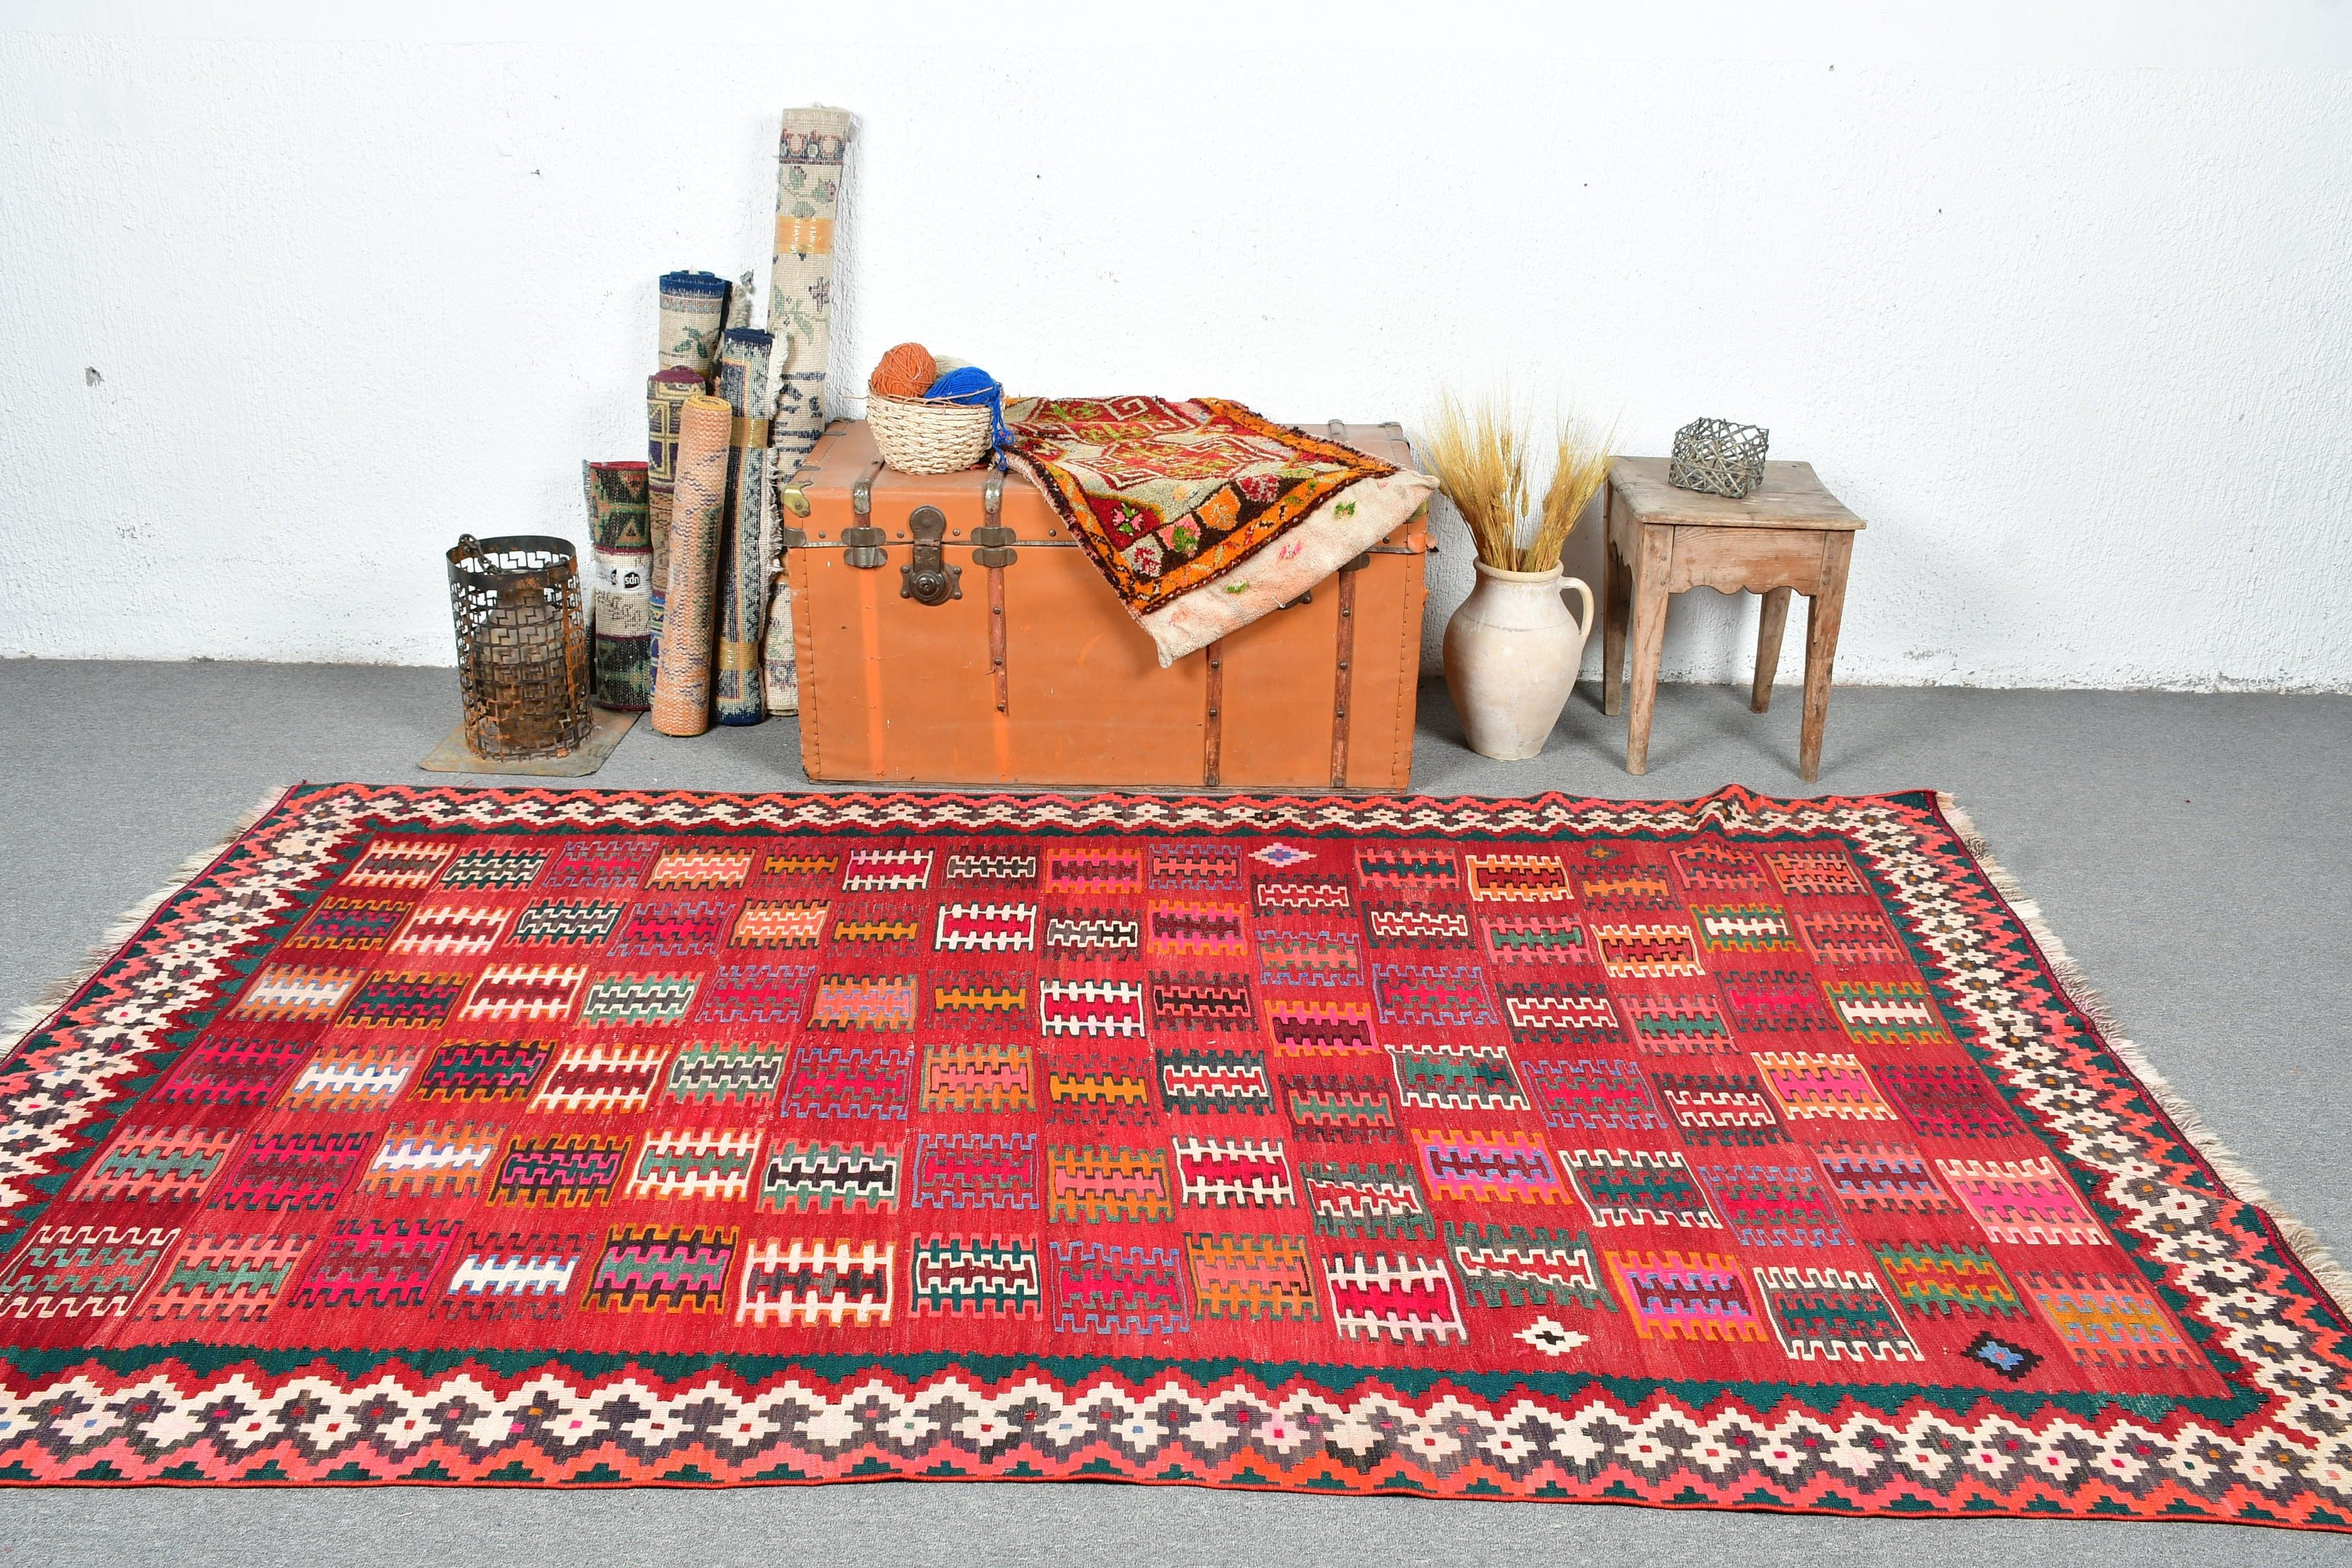 Living Room Rug, Salon Rug, Moroccan Rugs, Bedroom Rug, Kilim, Red Anatolian Rug, Turkish Rugs, Cute Rug, Vintage Rug, 5.3x8.7 ft Large Rug